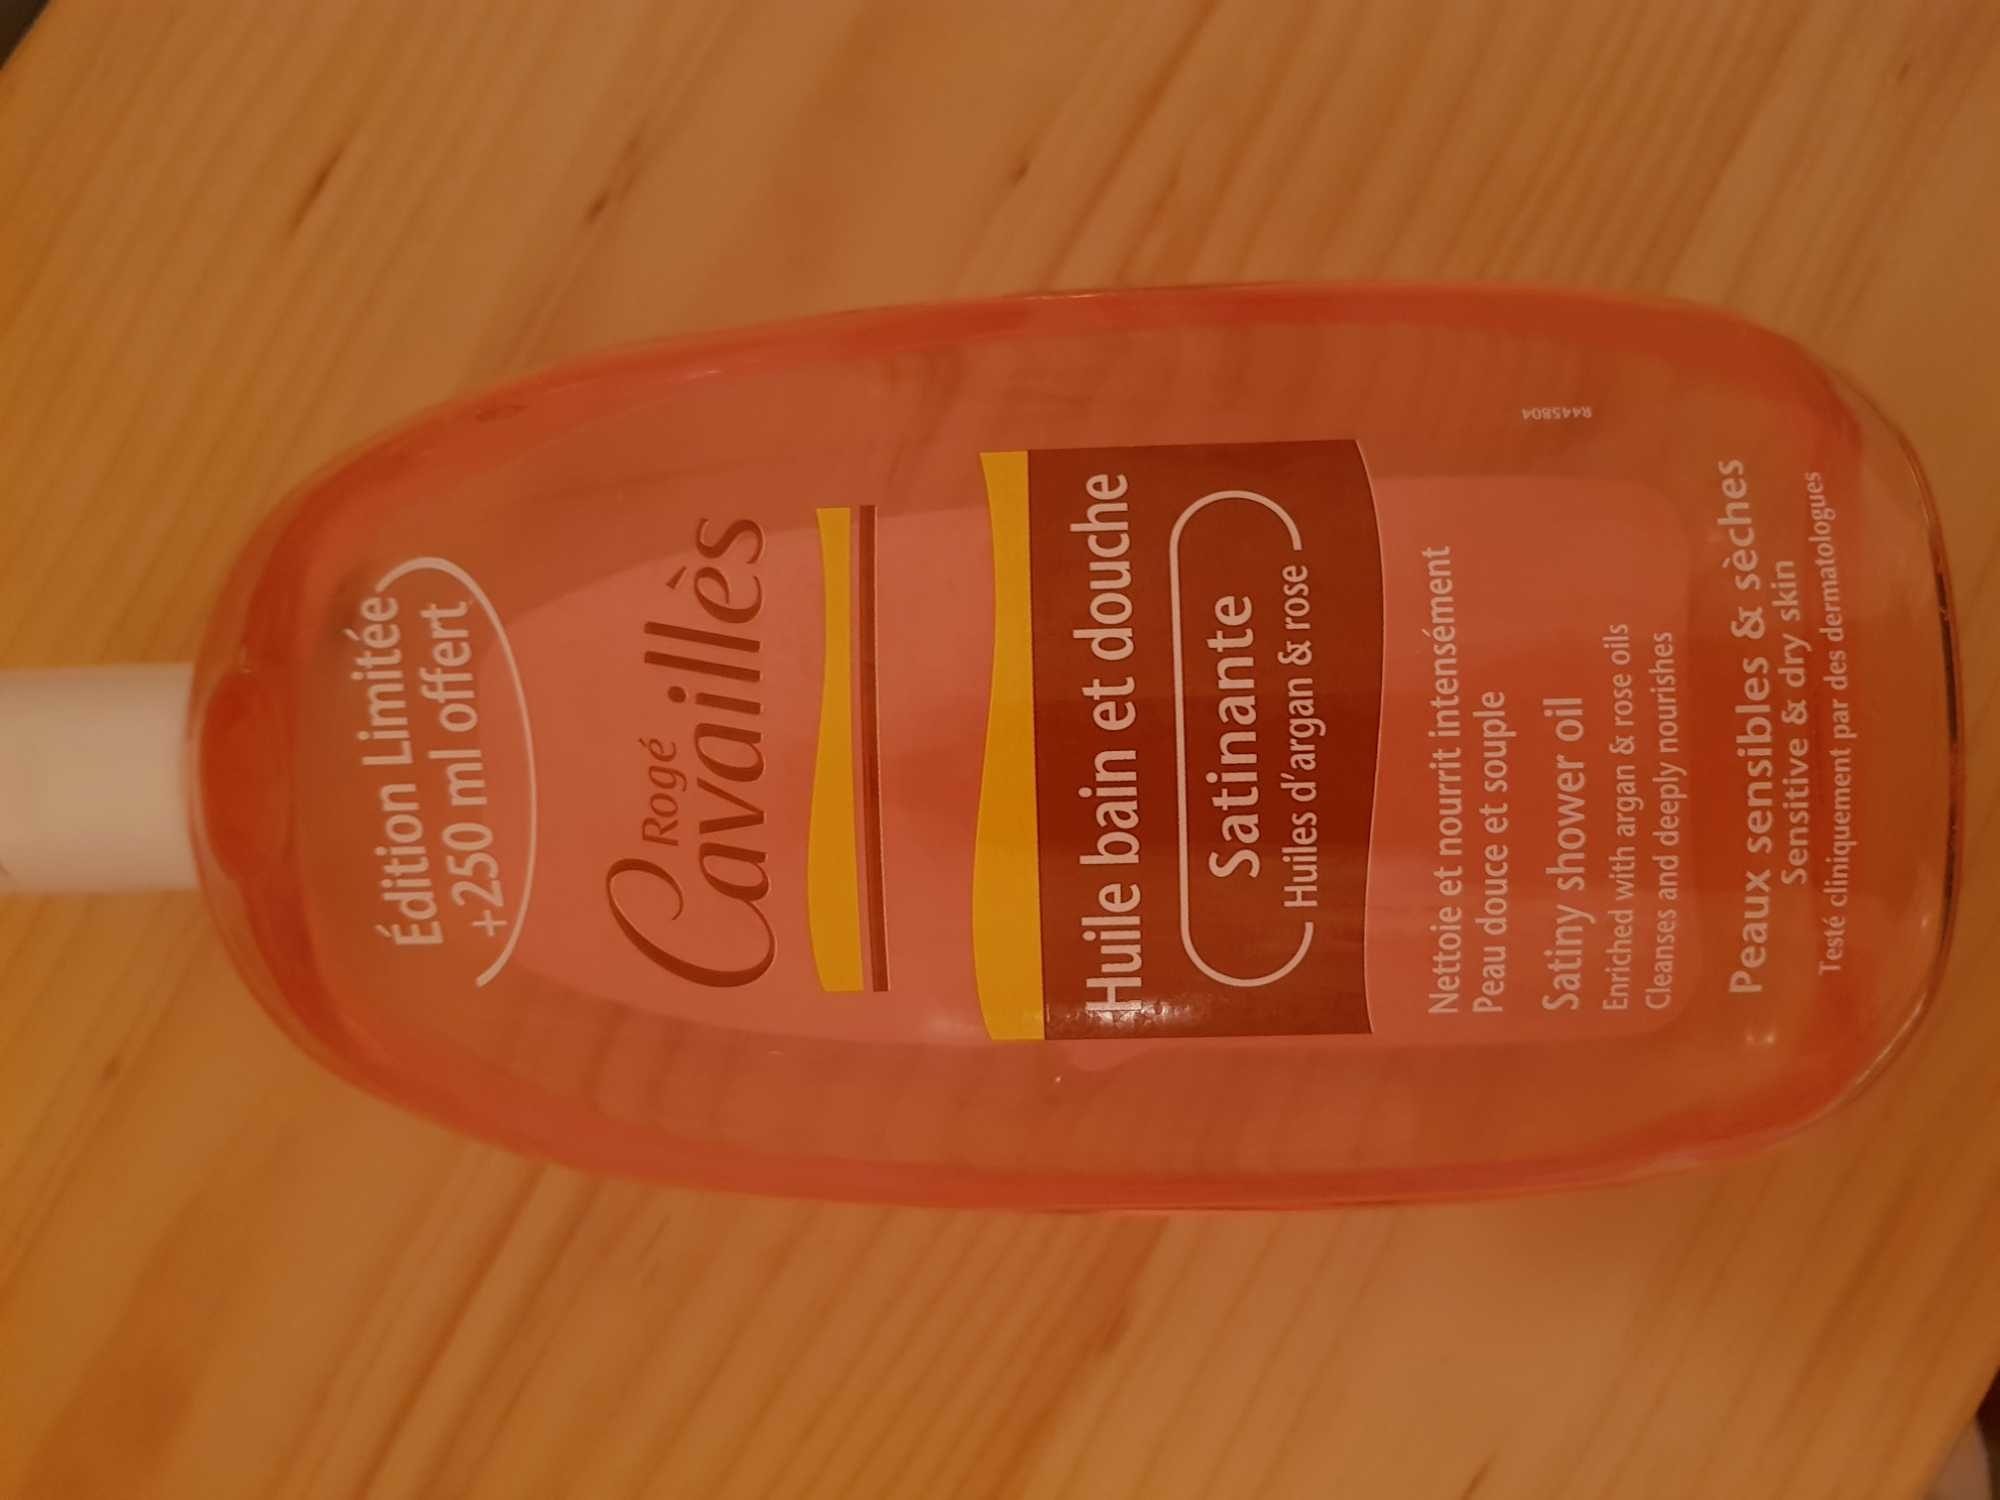 Huile bain et douche - Produkt - fr